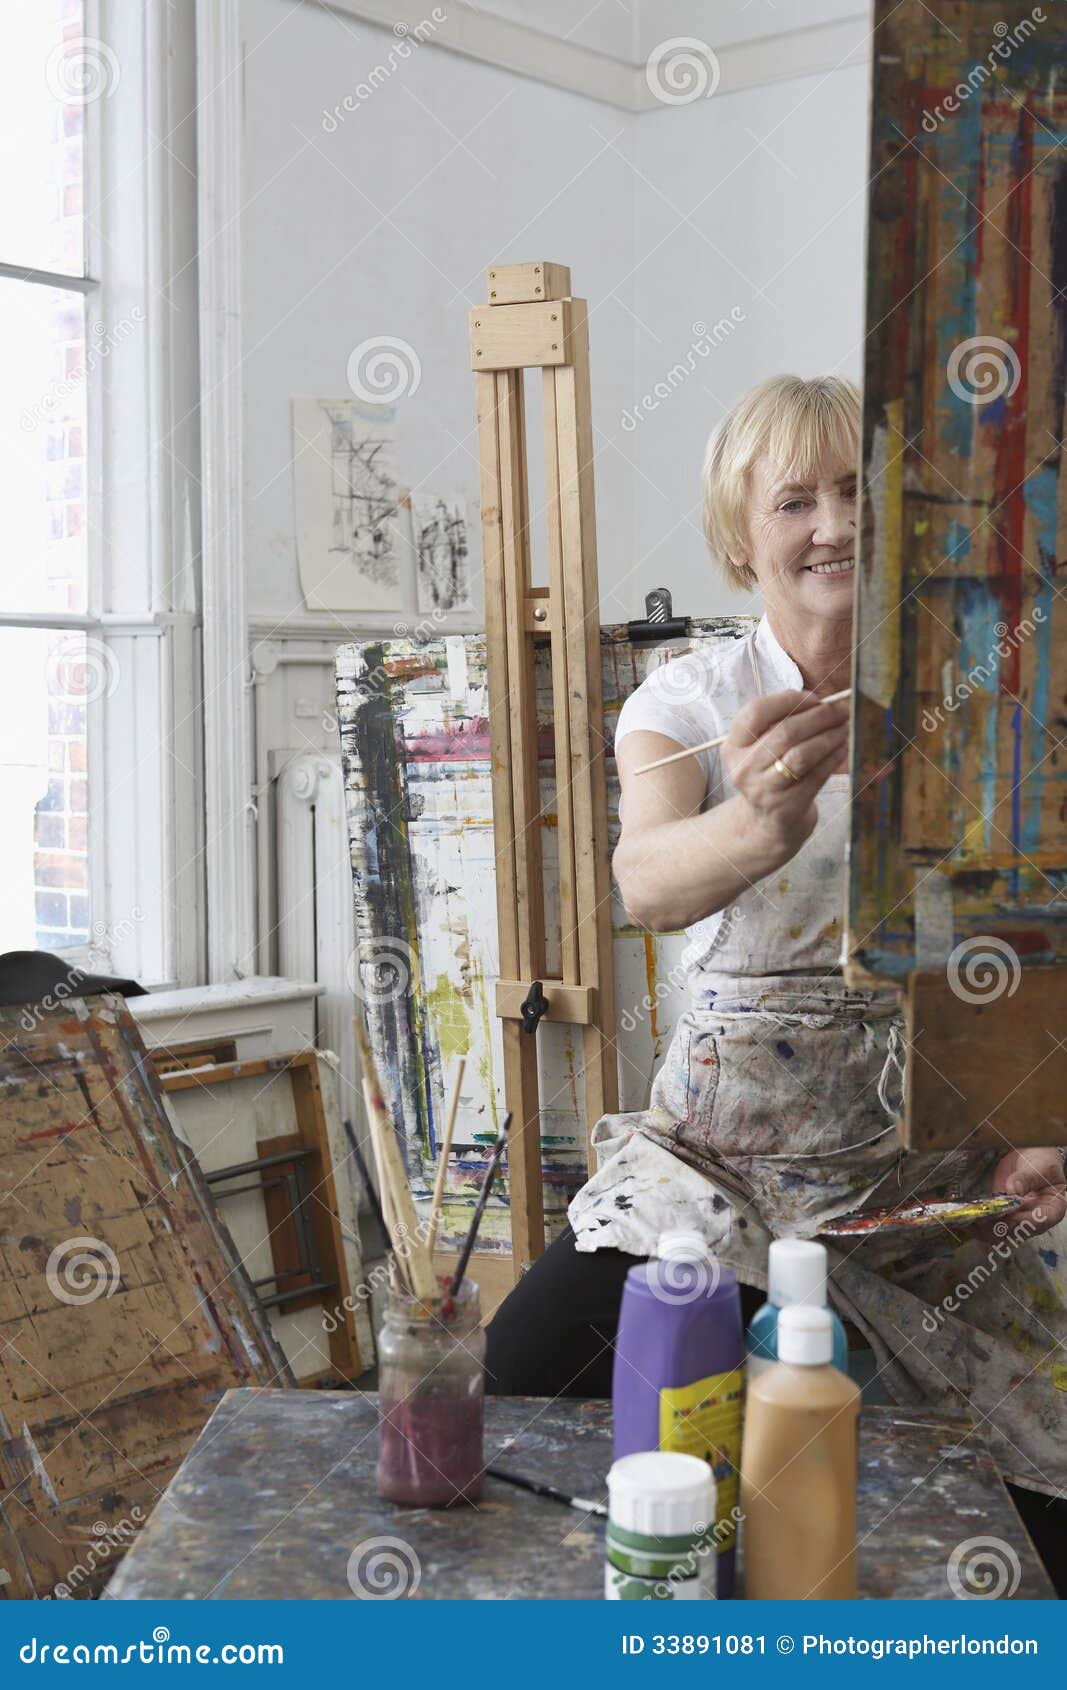 Mature Artist Painting In Art Studio Stock Image - Image ...